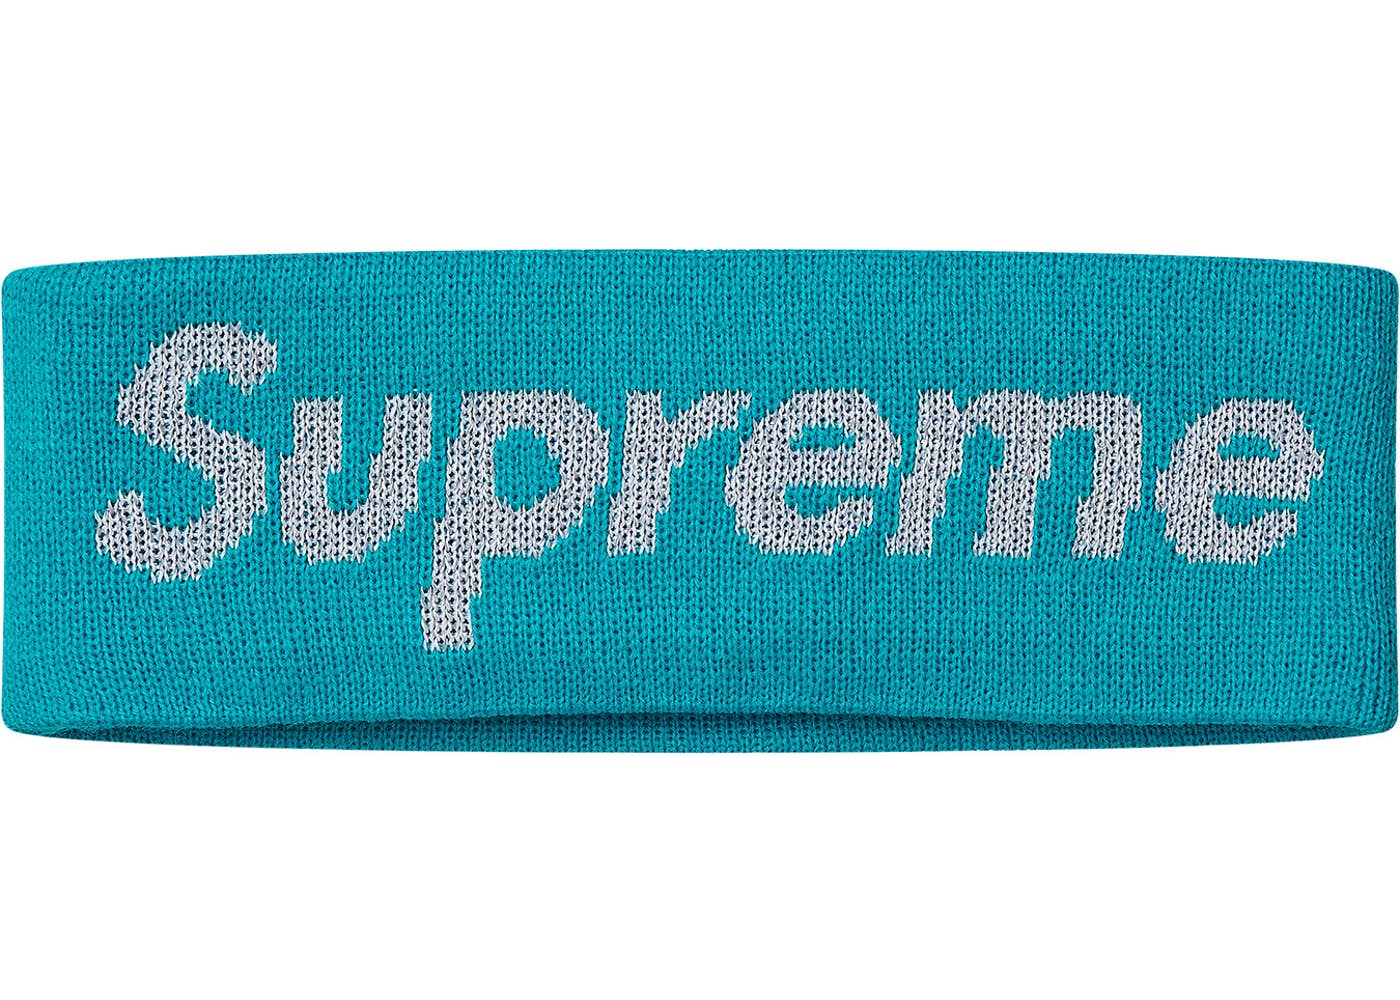 Supreme New Era Reflective Logo Headband (FW 17)- Teal